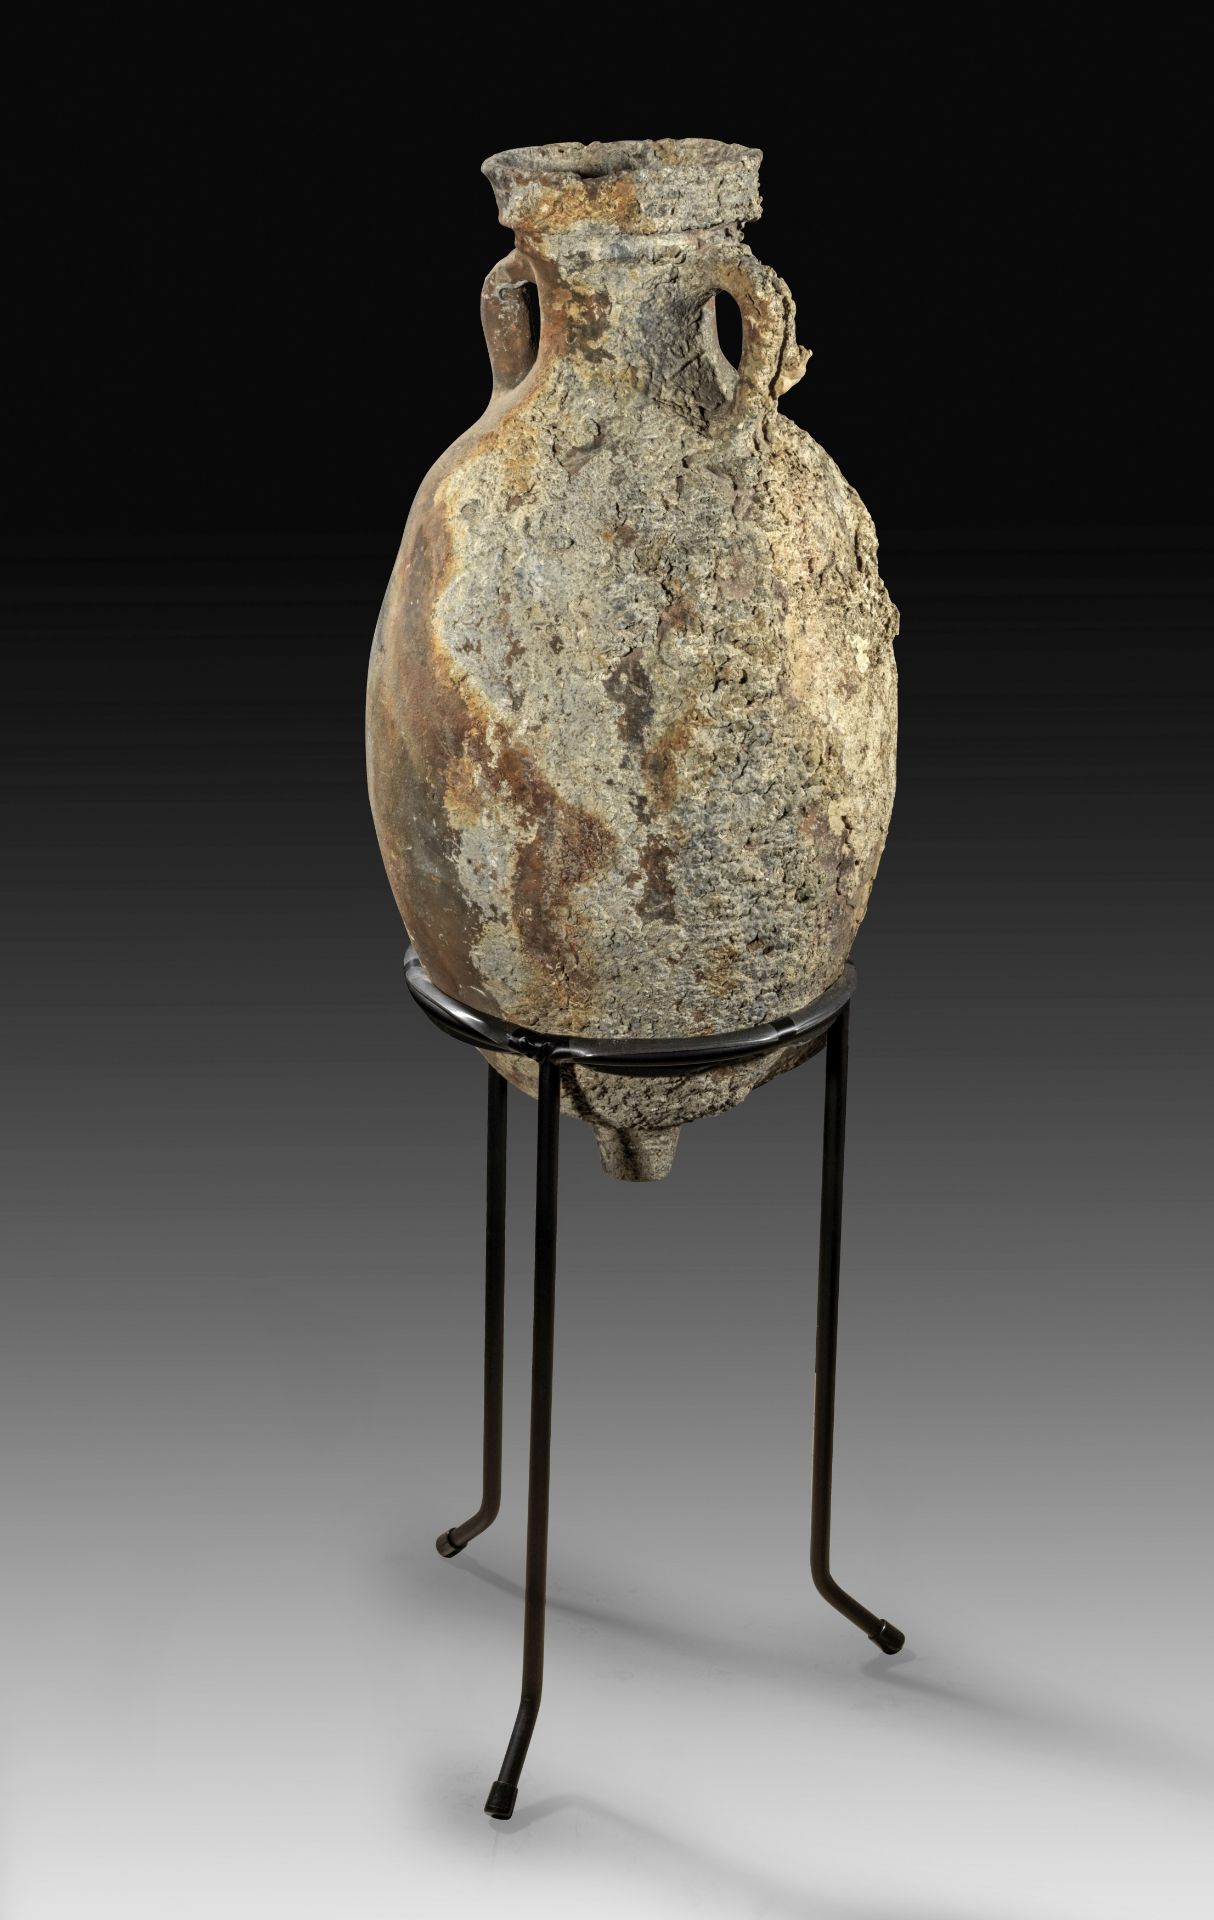 Roman transport amphora for garum typus Dressel 7. 